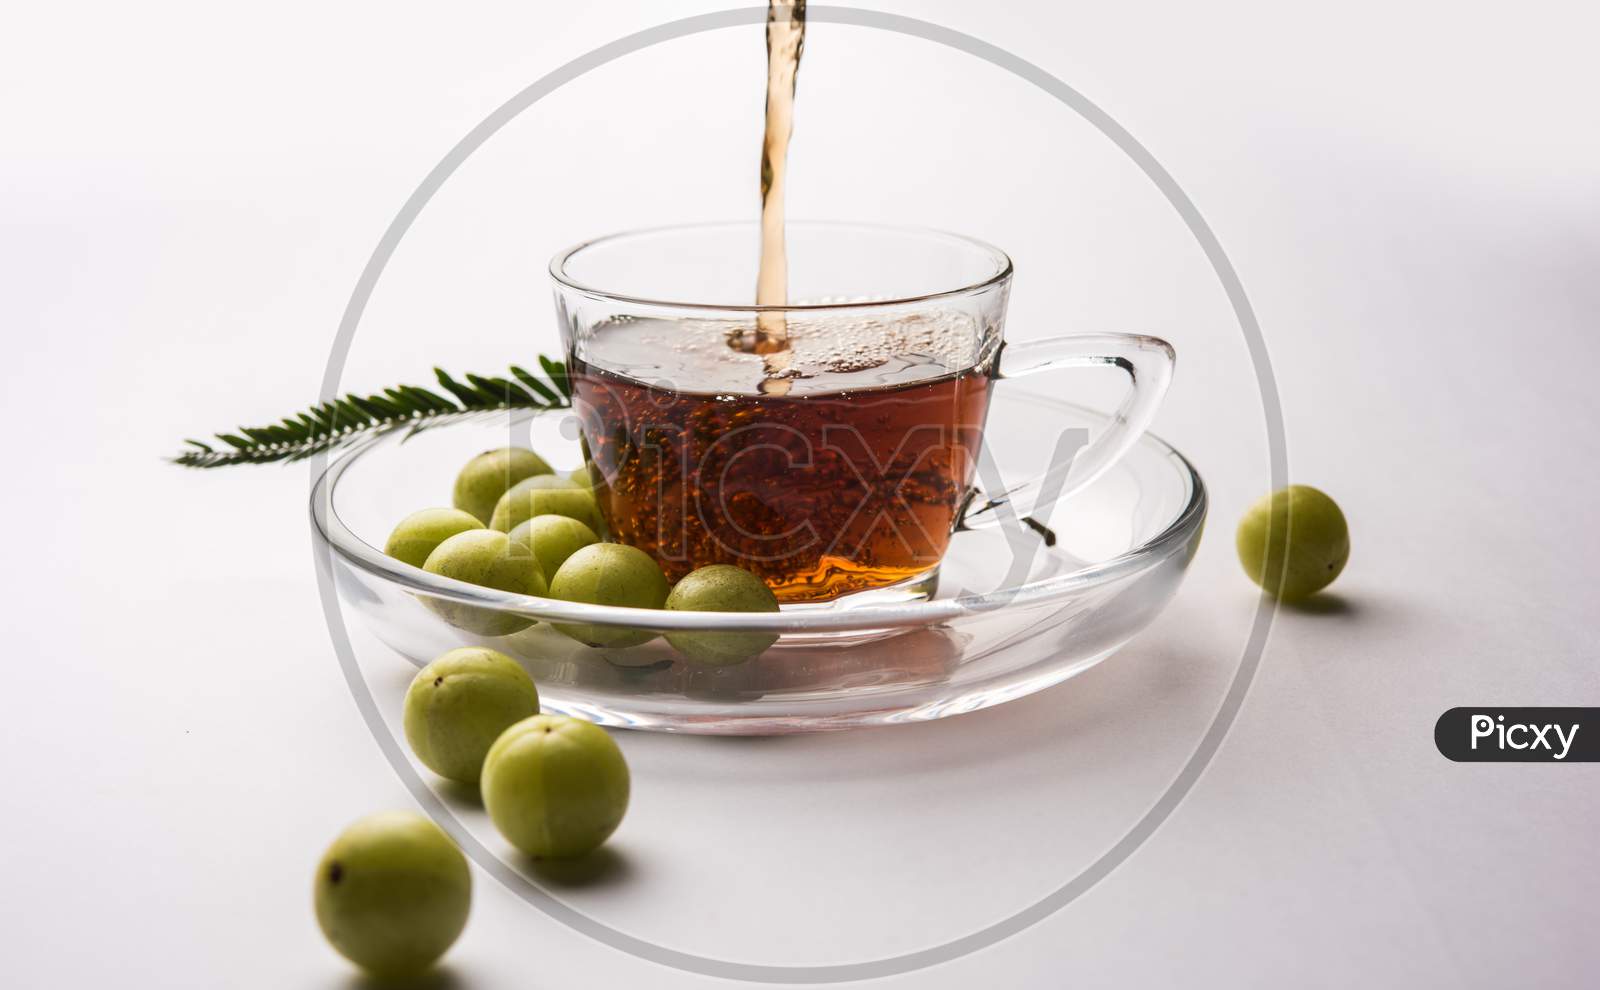 amla Tea or Avla Chai